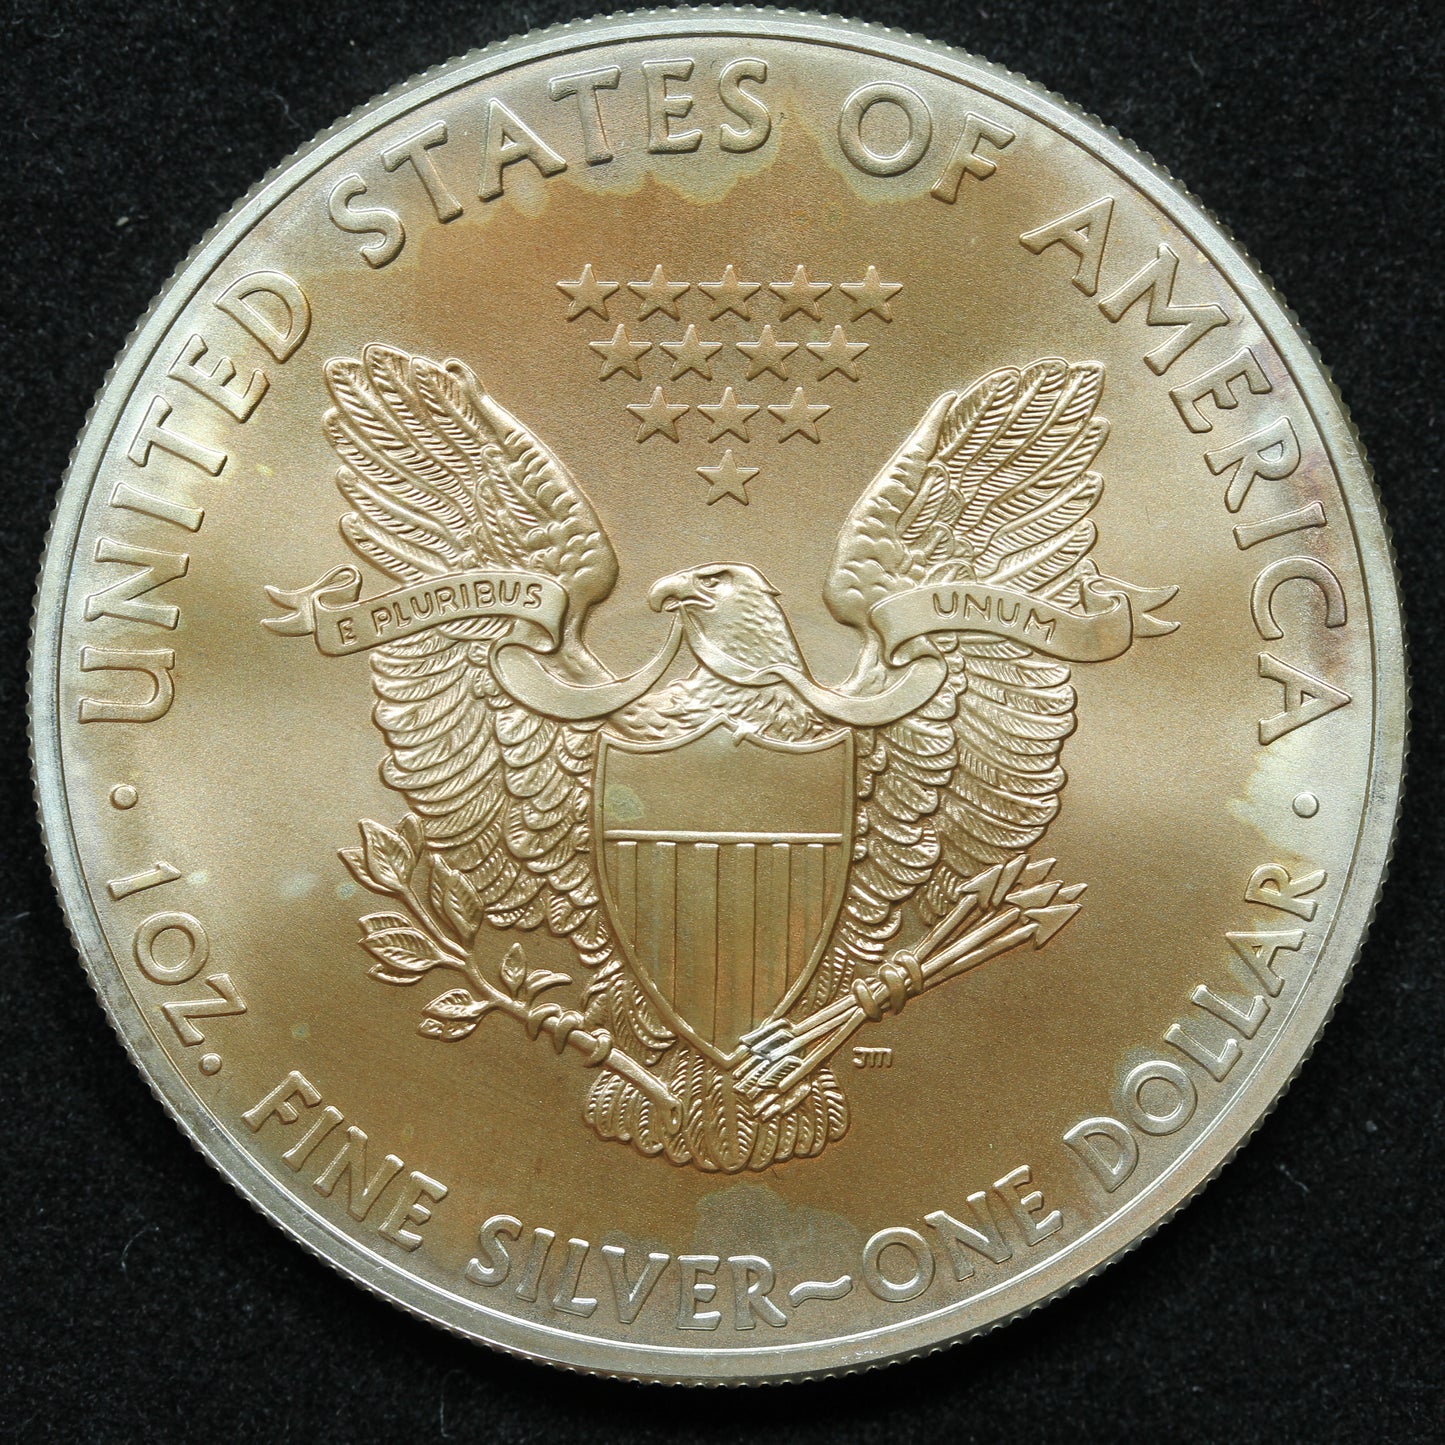 2013 American Silver Eagle $1 Bullion Coin .999 - Crazy Toning!